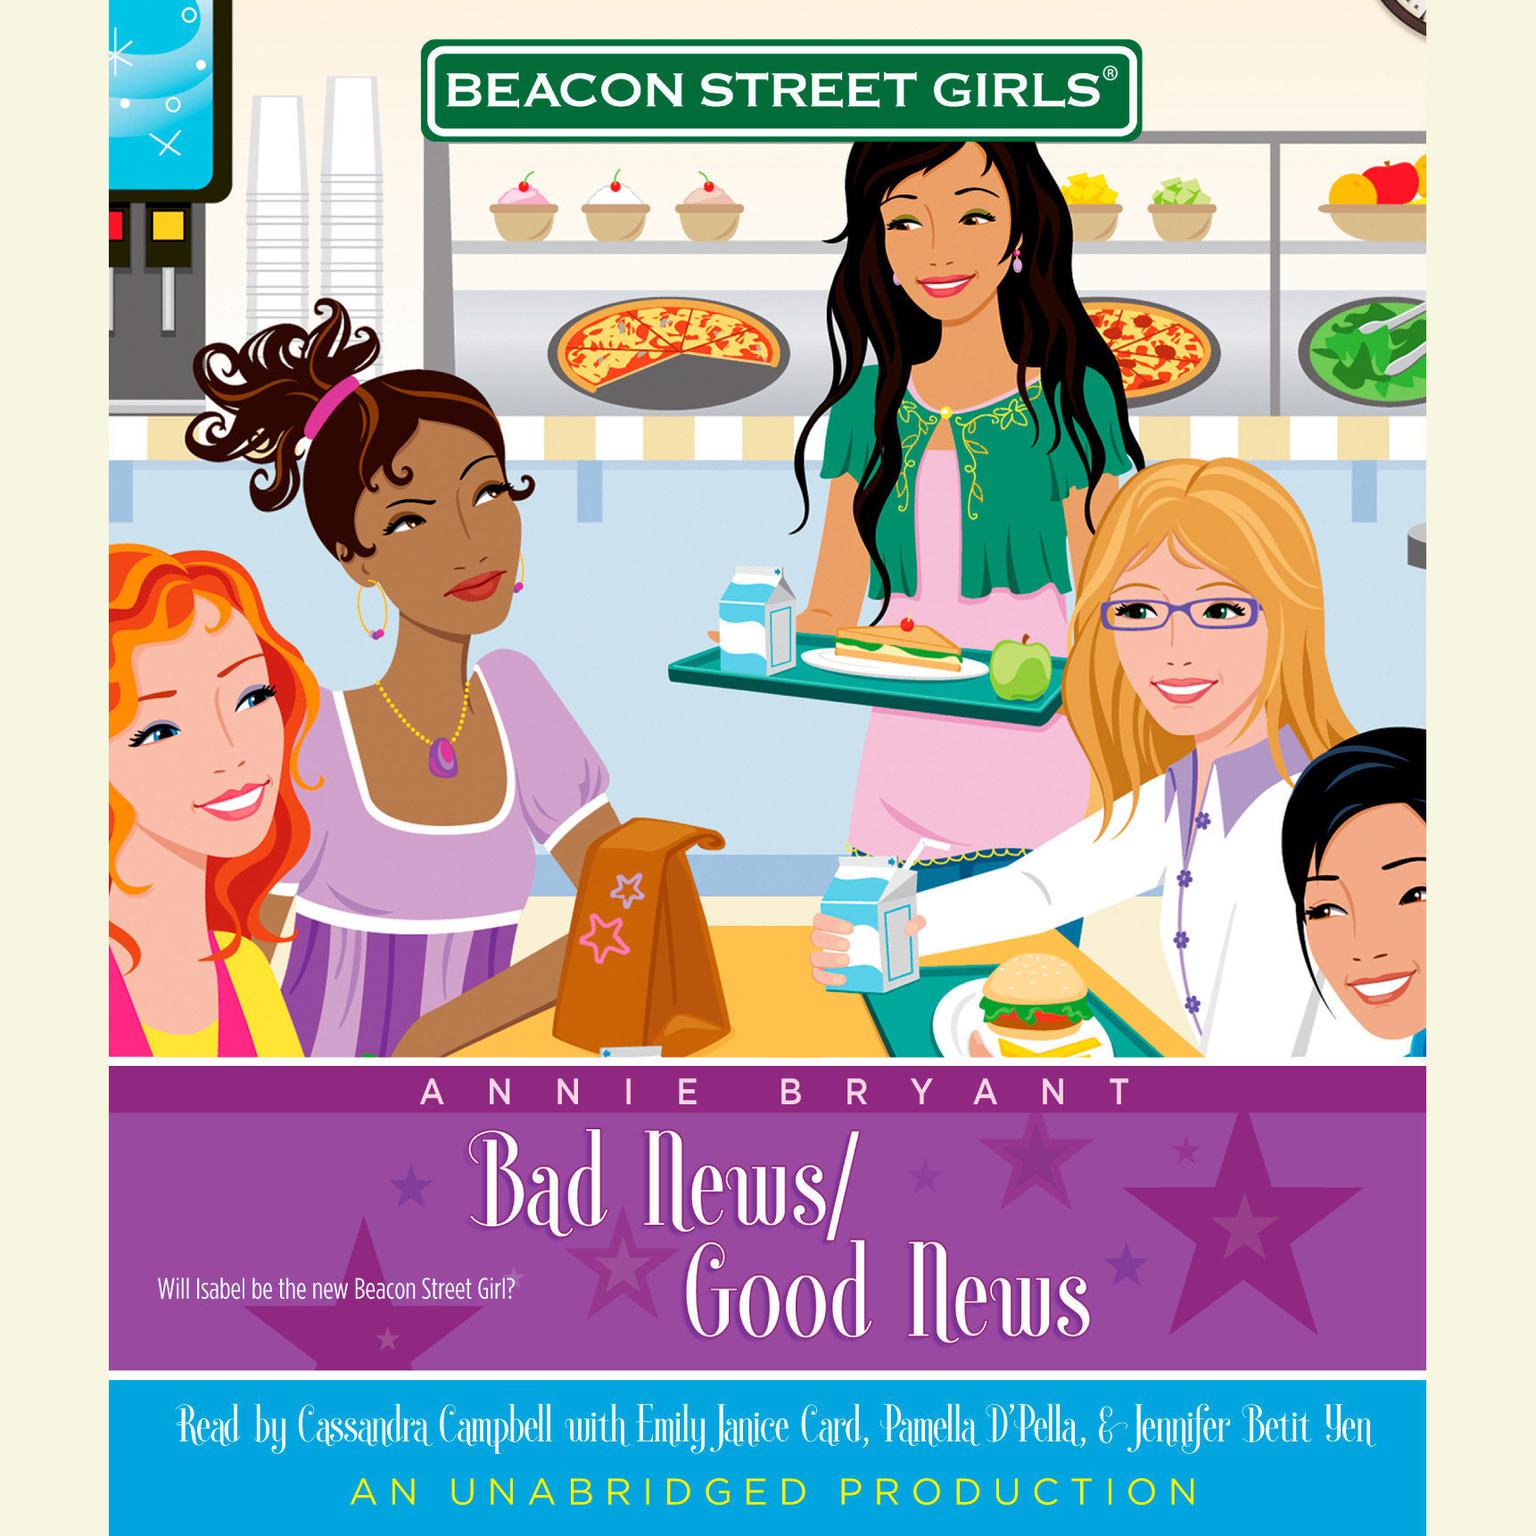 Beacon Street Girls #2: Bad News/Good News Audiobook, by Annie Bryant